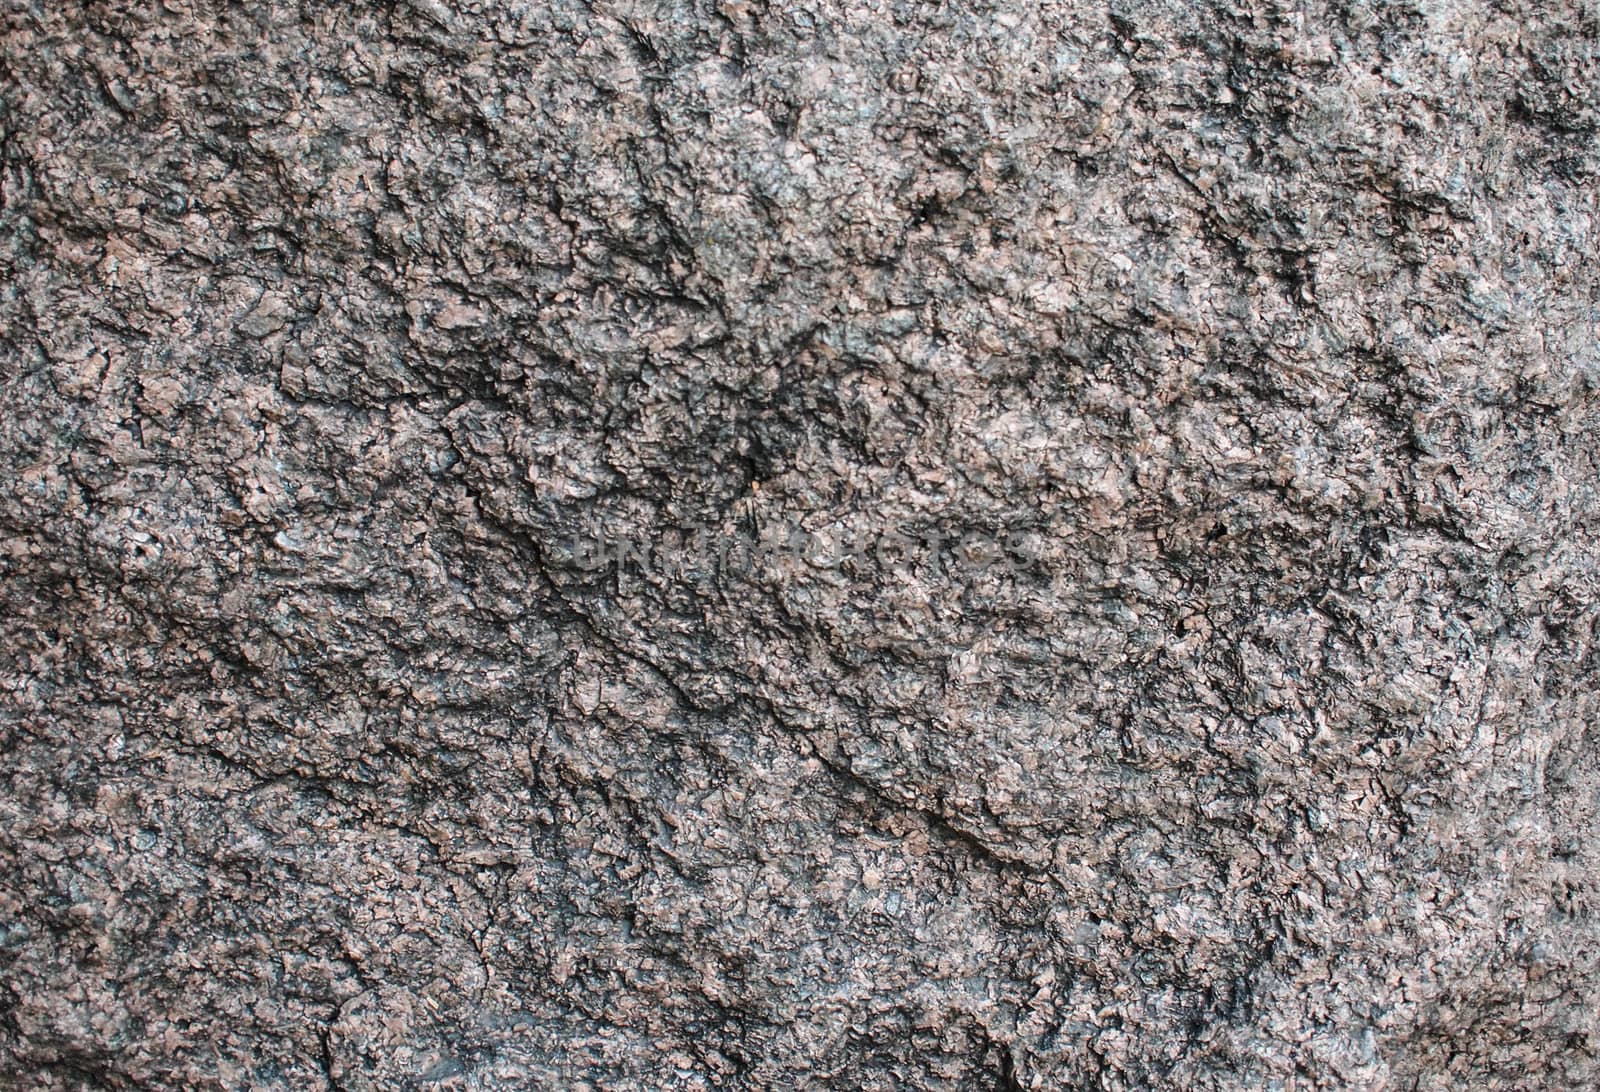 A background rock texture